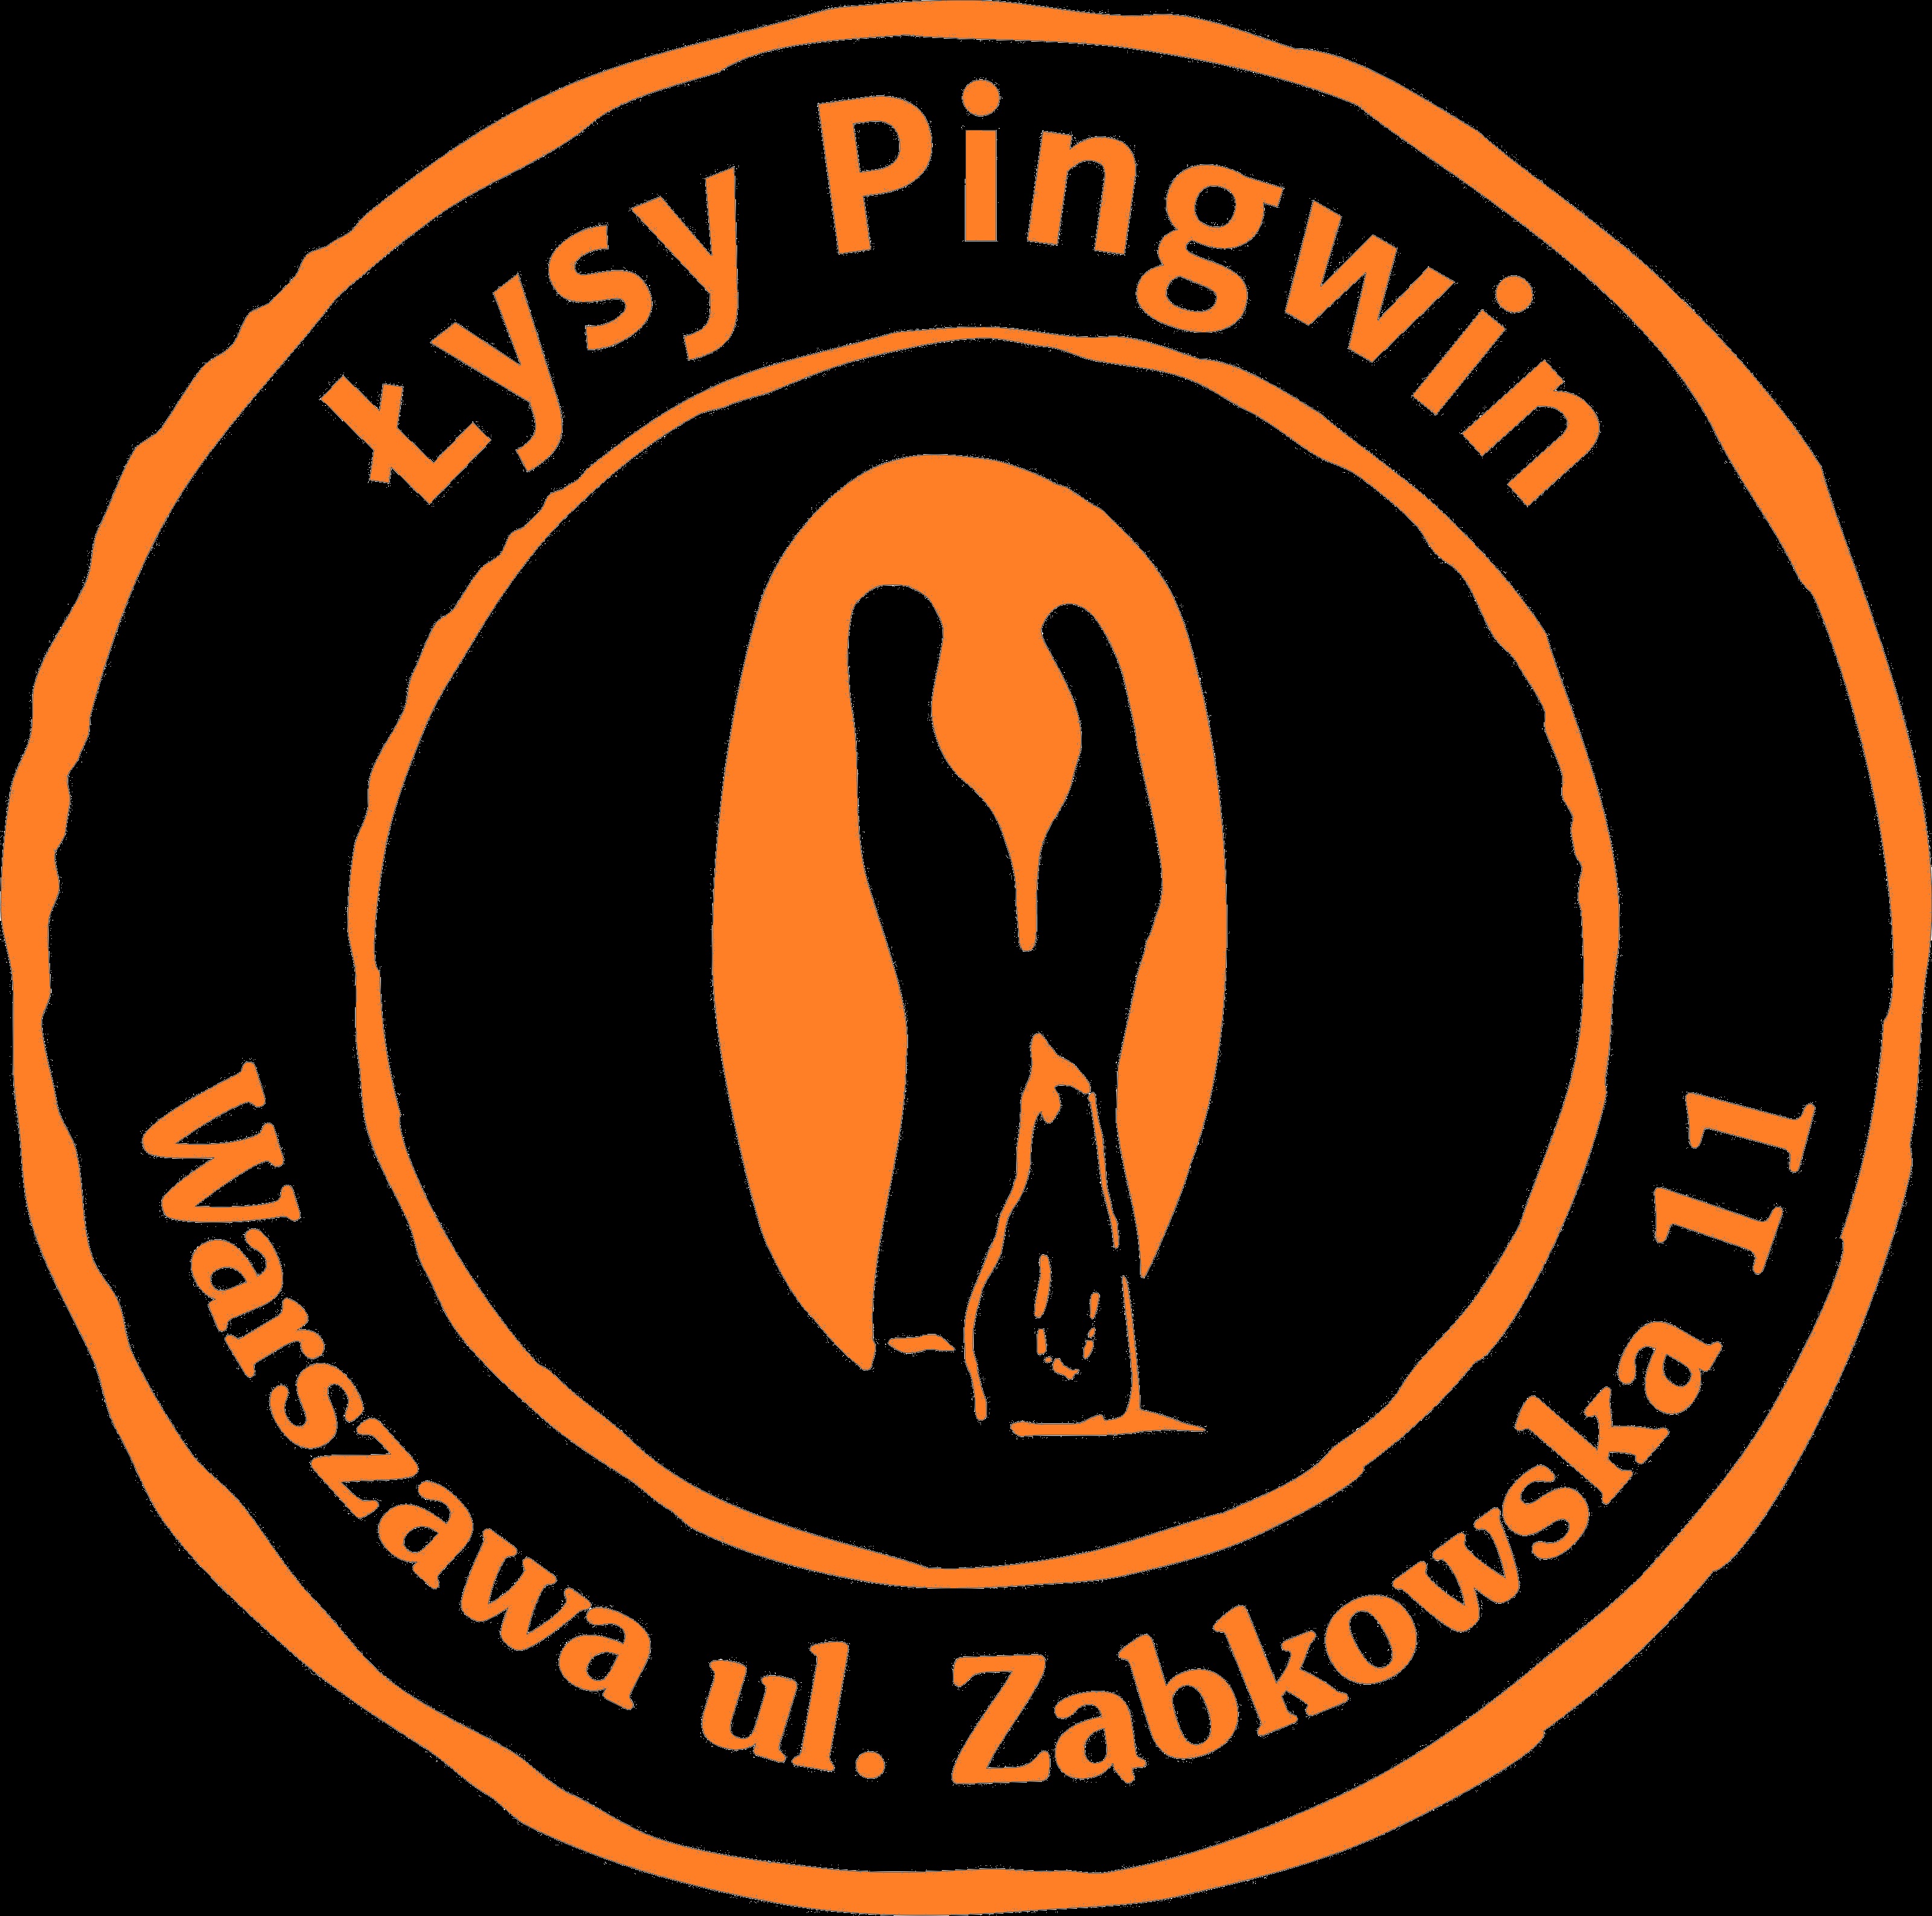 Łysy Pingwin - Warszawa